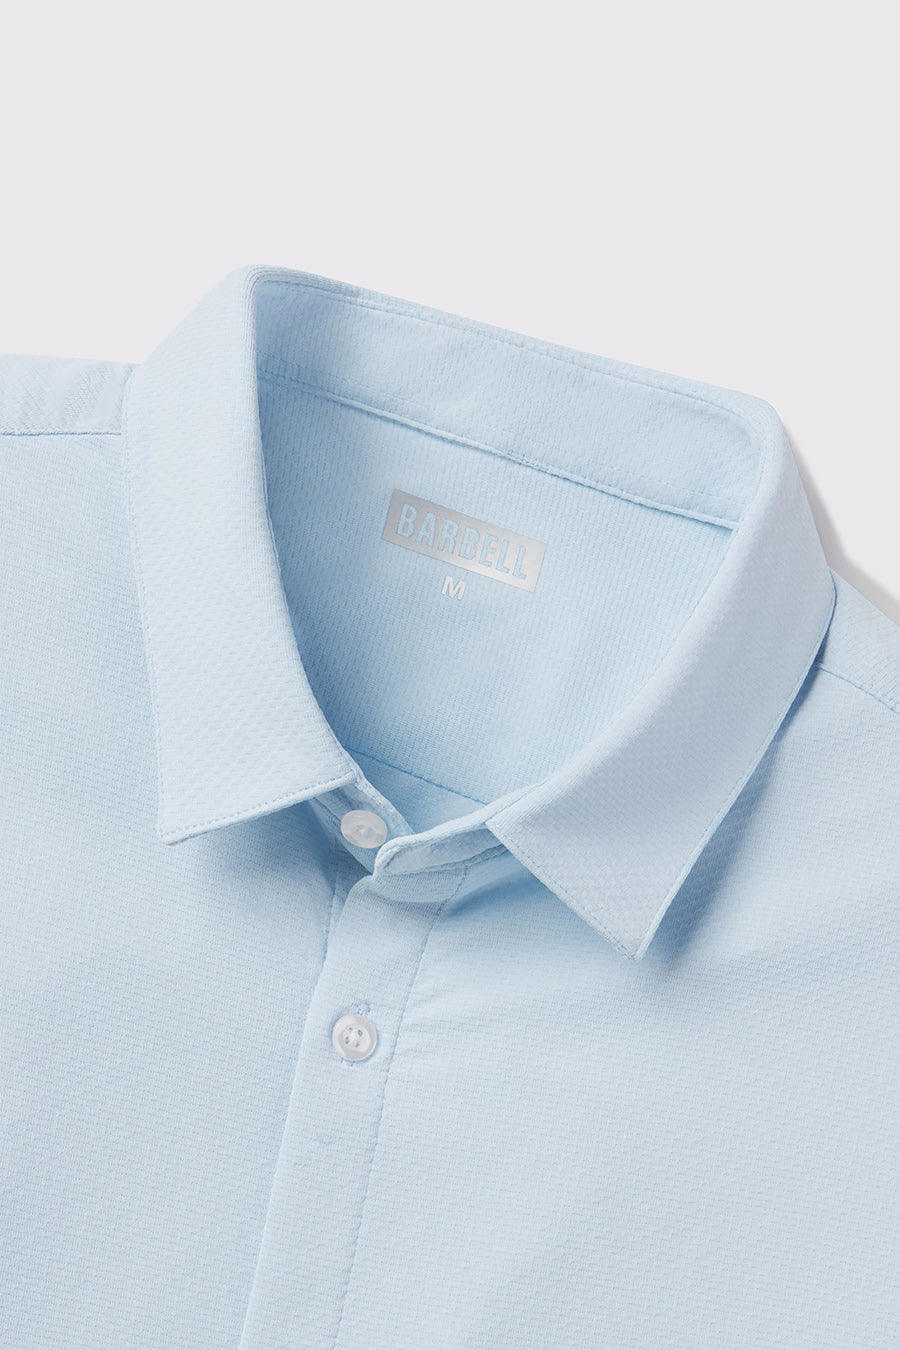 Motive Dress Shirt - Blue - photo from collar detail #color_blue